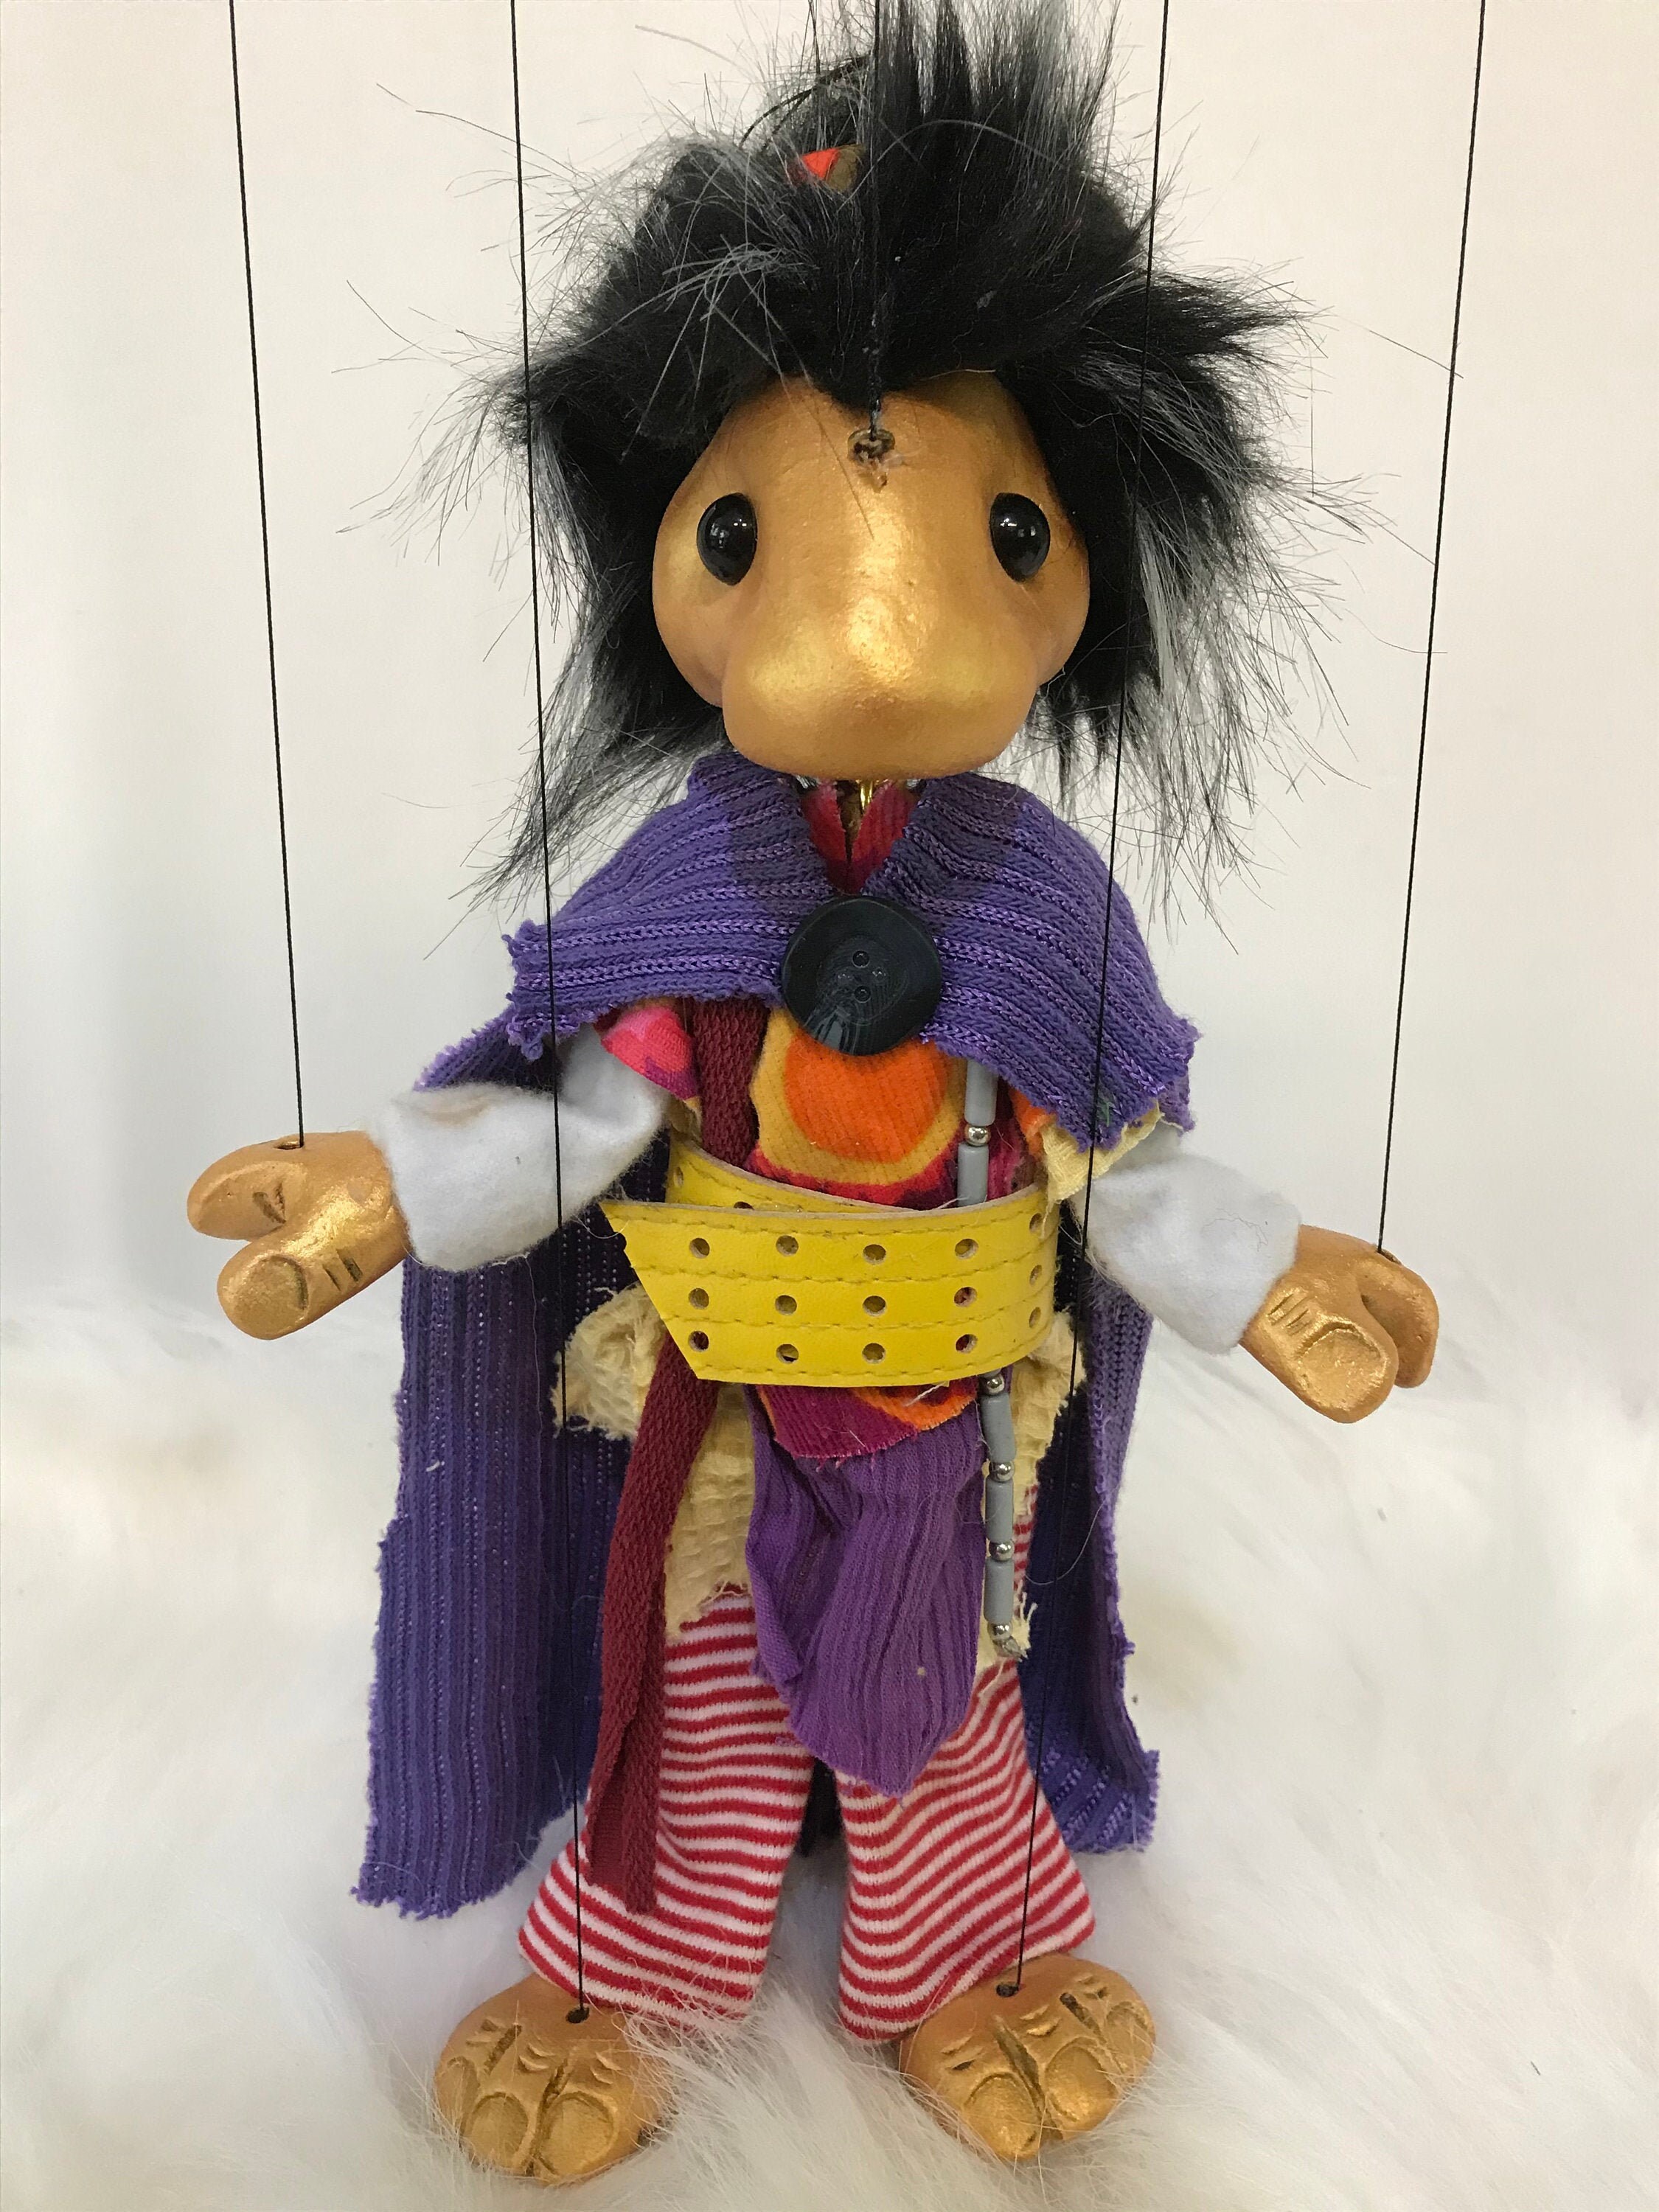 Princess Wooden Marionette 